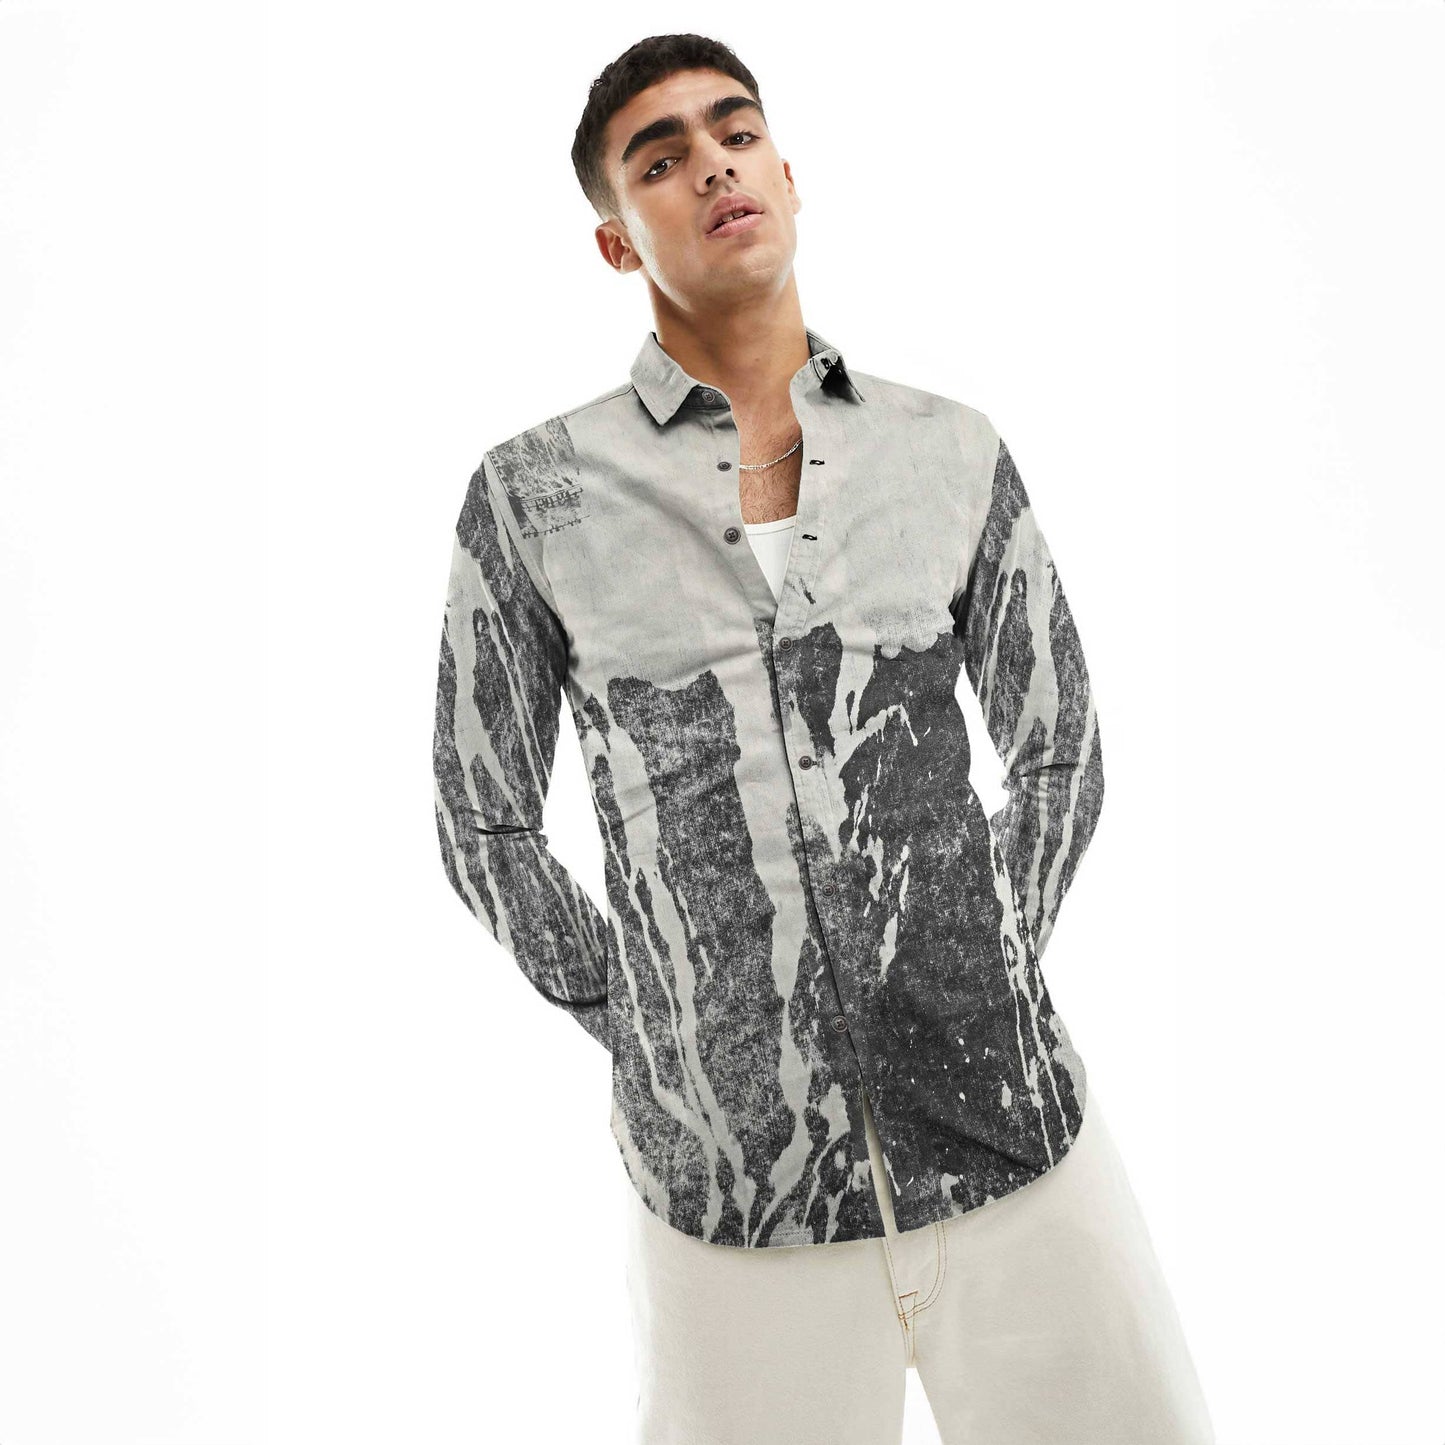 JC Men's Dye Style Denim Casual Shirt Men's Casual Shirt First Choice Grey & Black S 